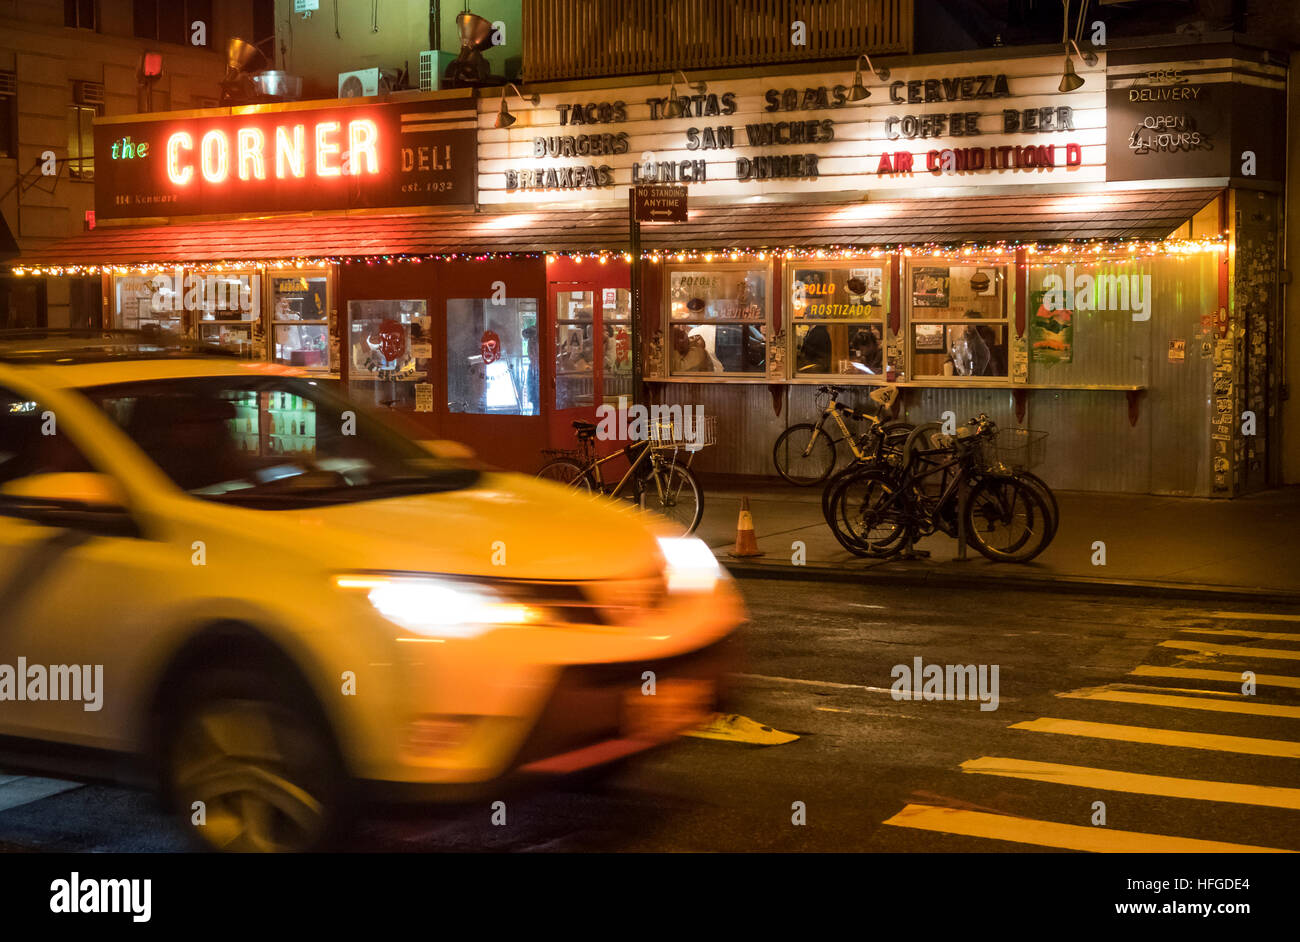 The Corner Deli, La Esquina, a popular Mexican restaurant in Soho in New York City Stock Photo